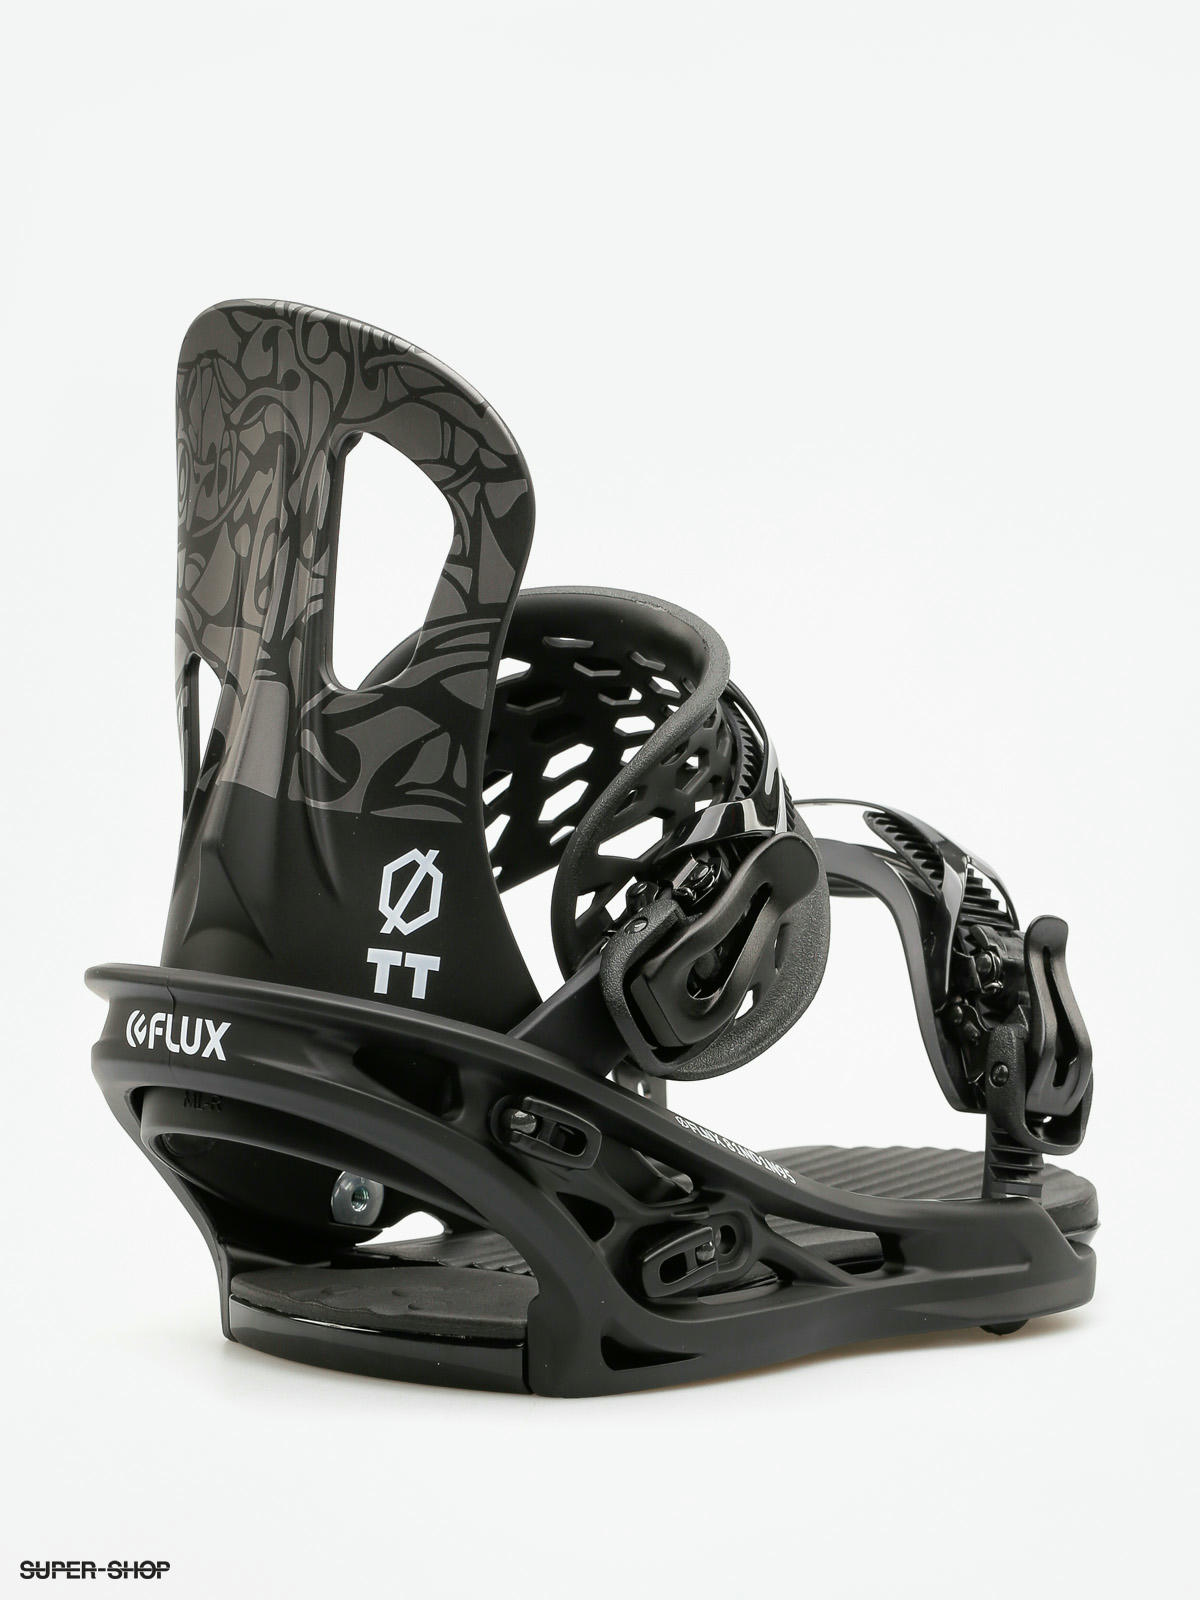 Mens Flux Snowboard bindings TT (black)